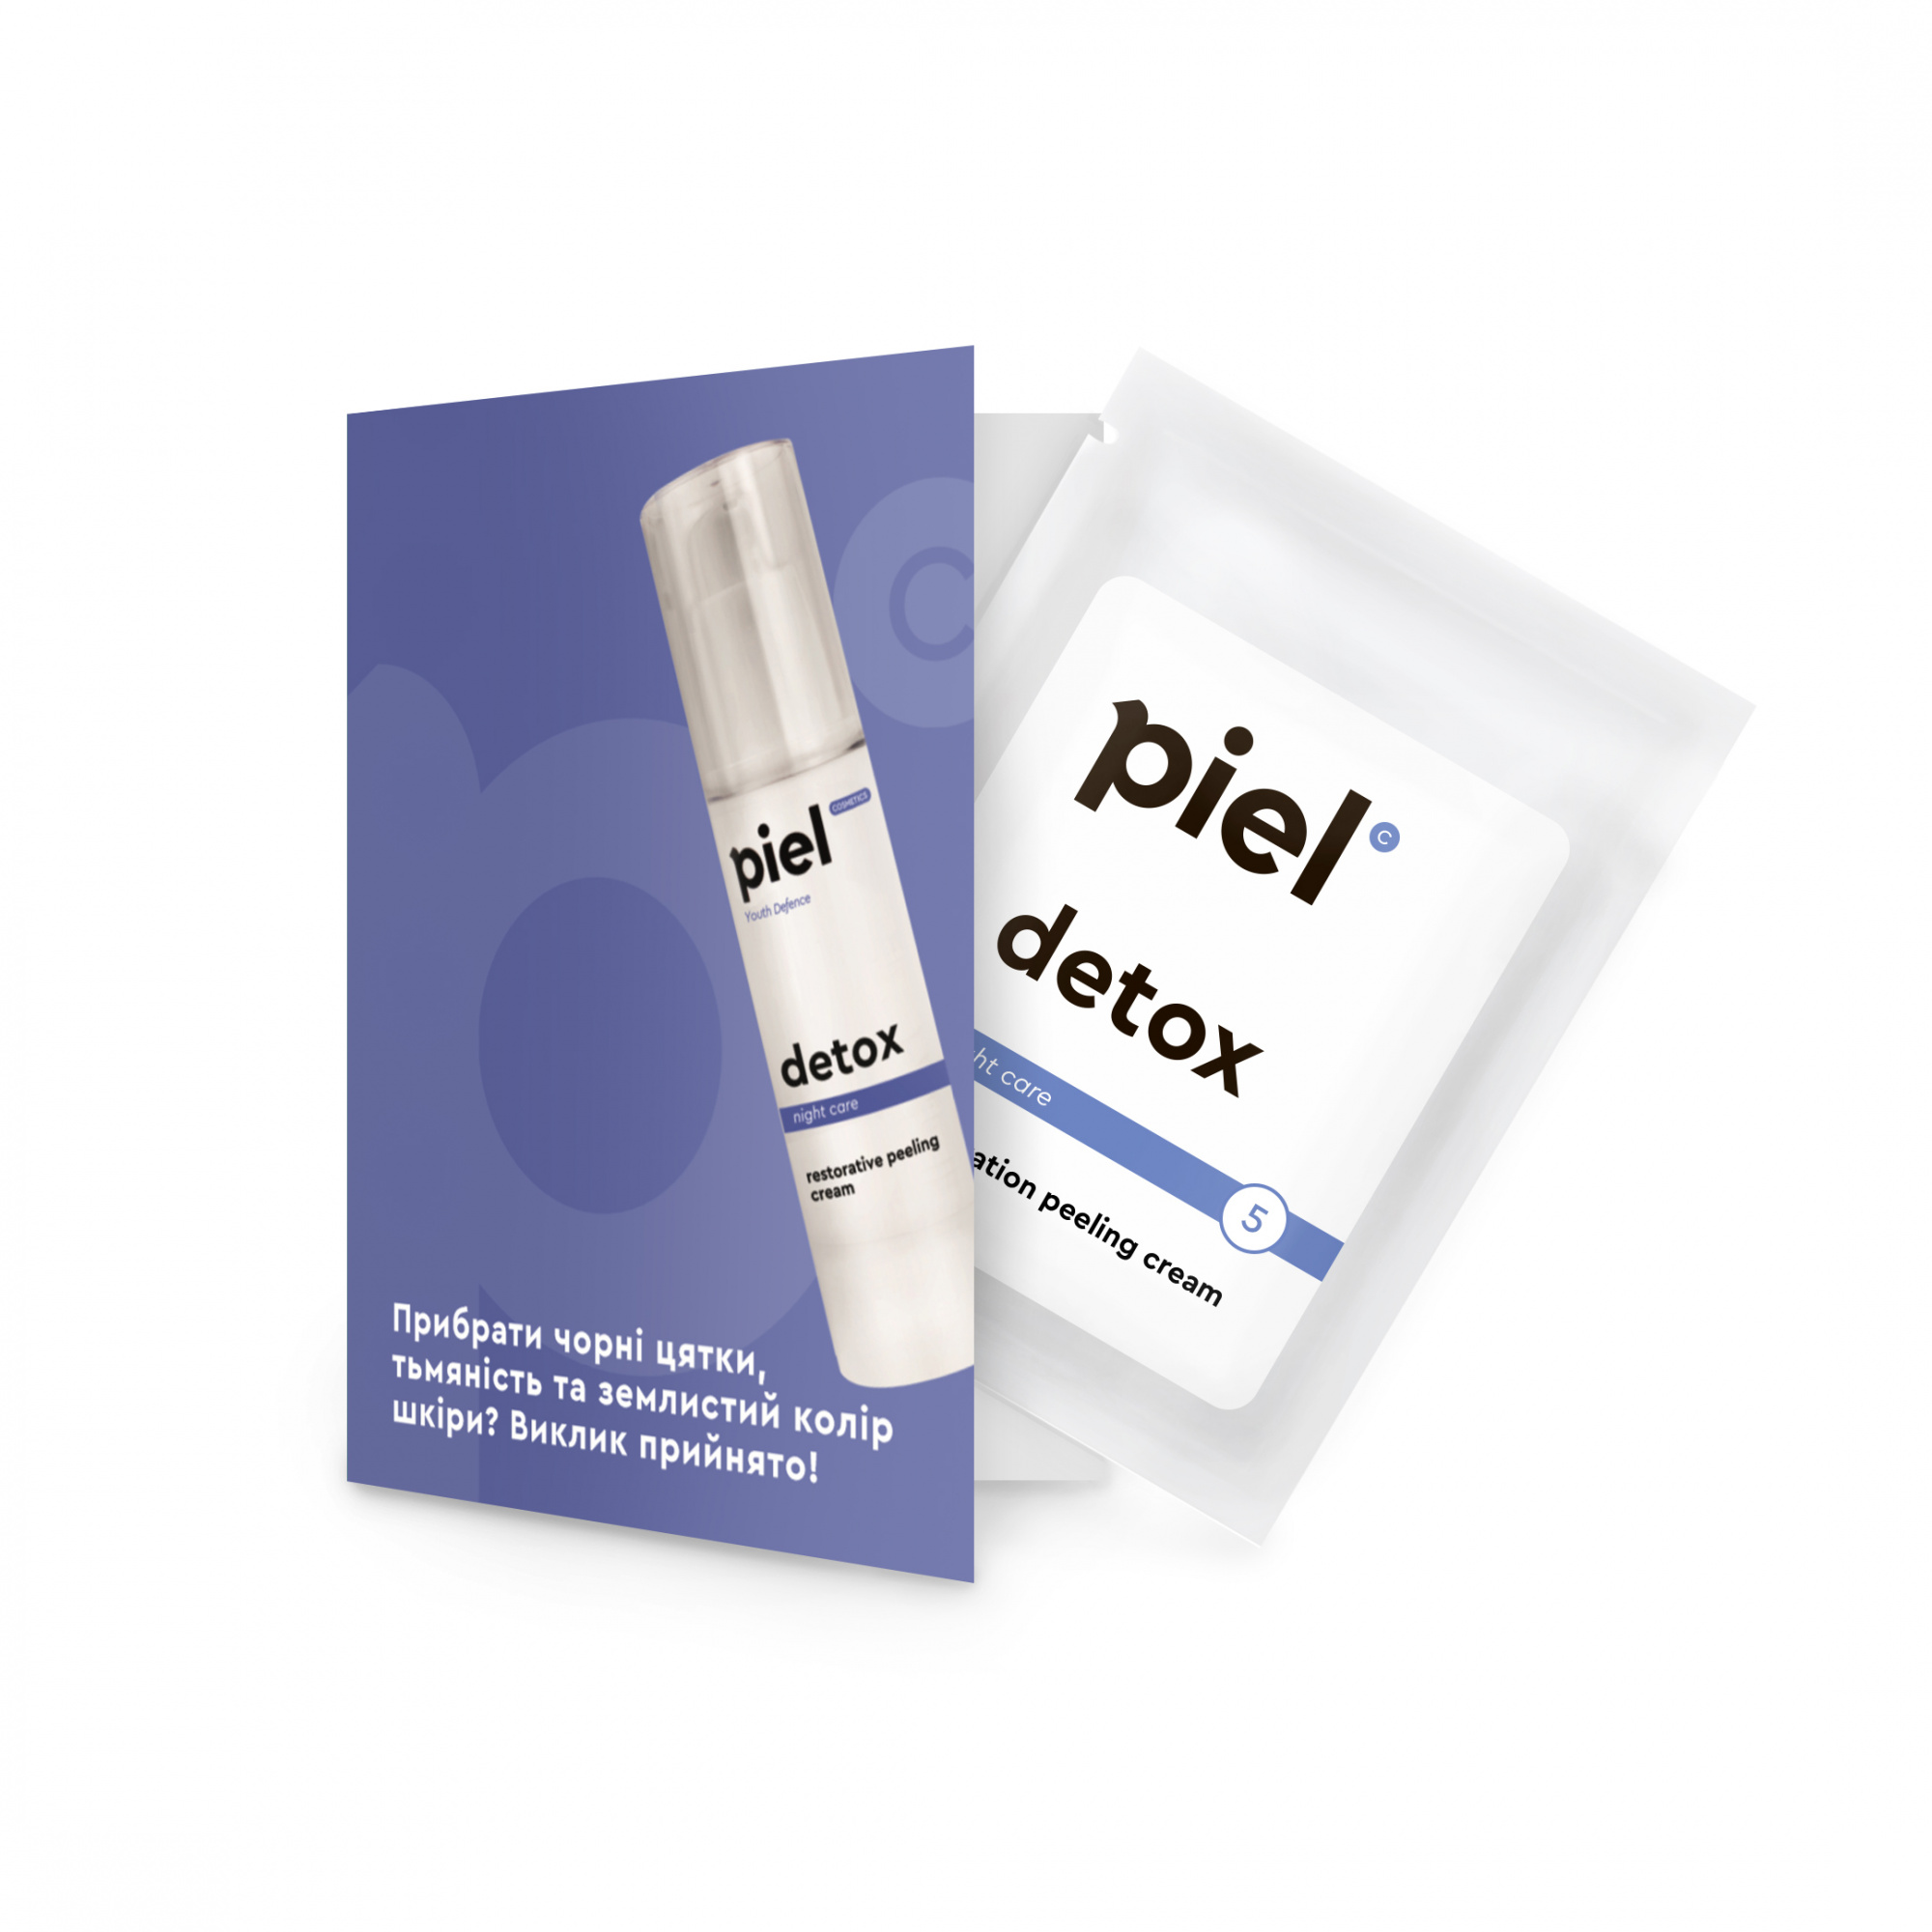 Miniature DETOX Detoxing Night Cream for all skin types